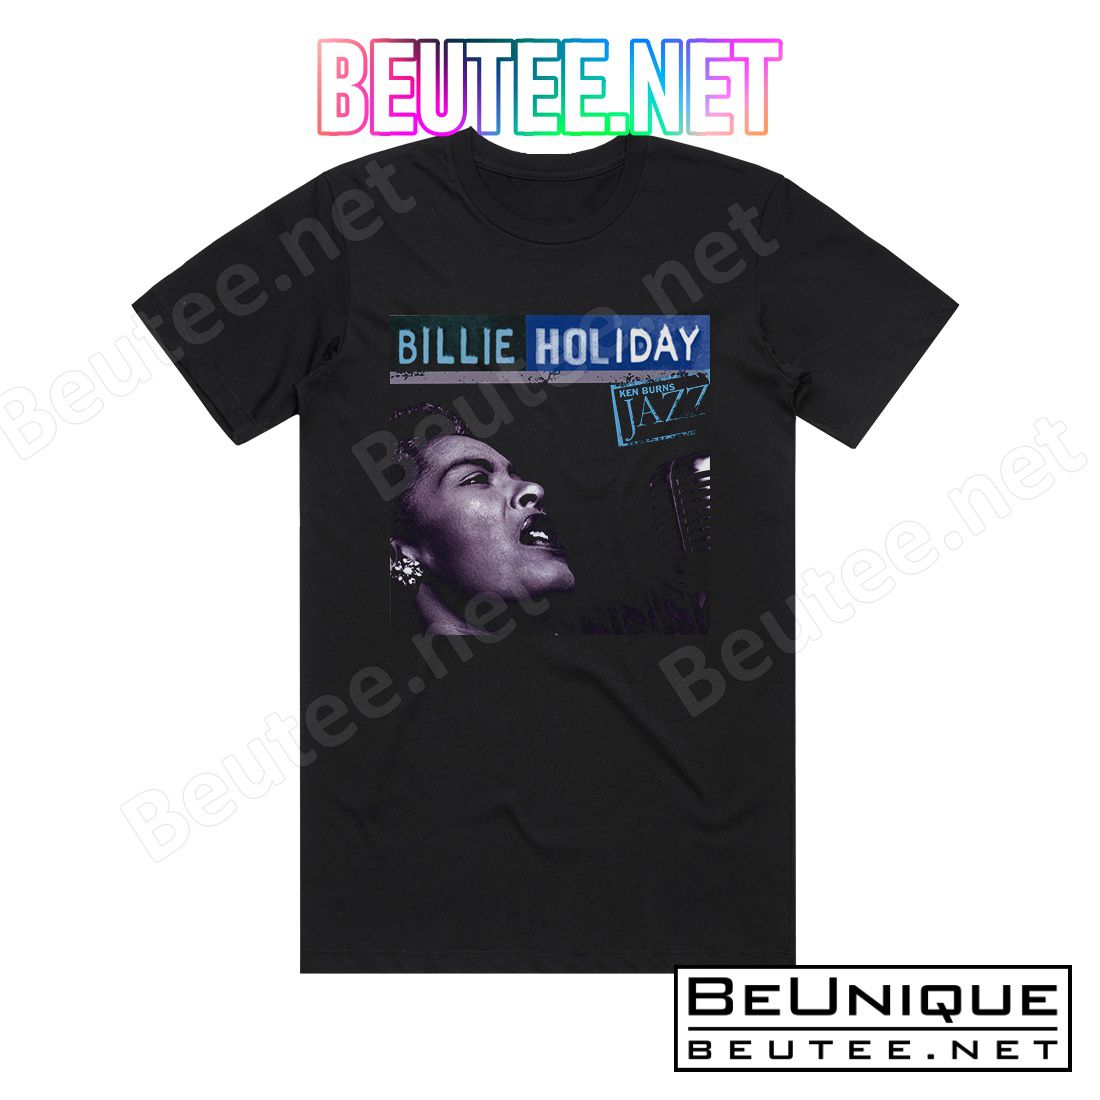 Billie Holiday Ken Burns Jazz Definitive Billie Holiday Album Cover T-Shirt